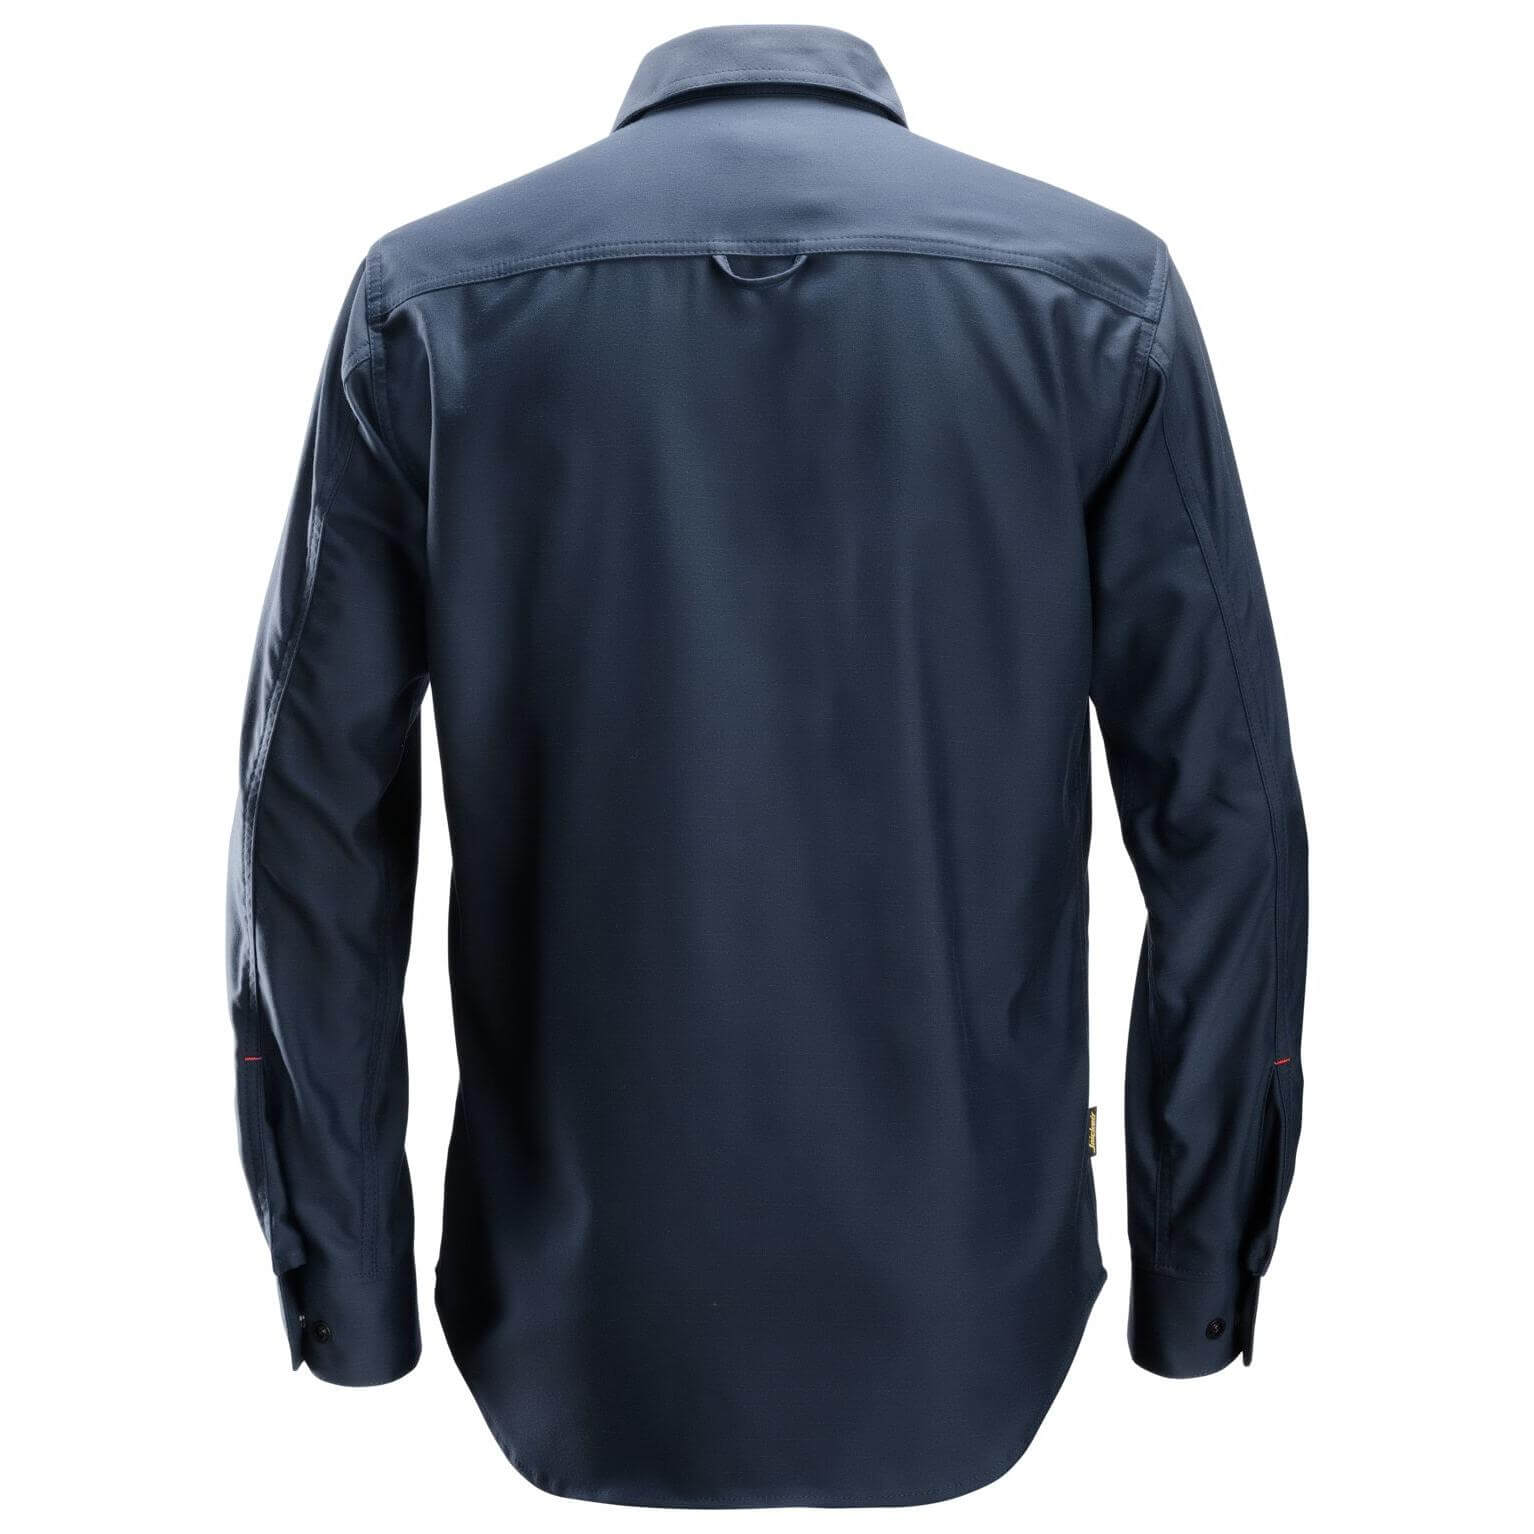 Snickers 8564 ProtecWork FR Long Sleeve Welding Shirt